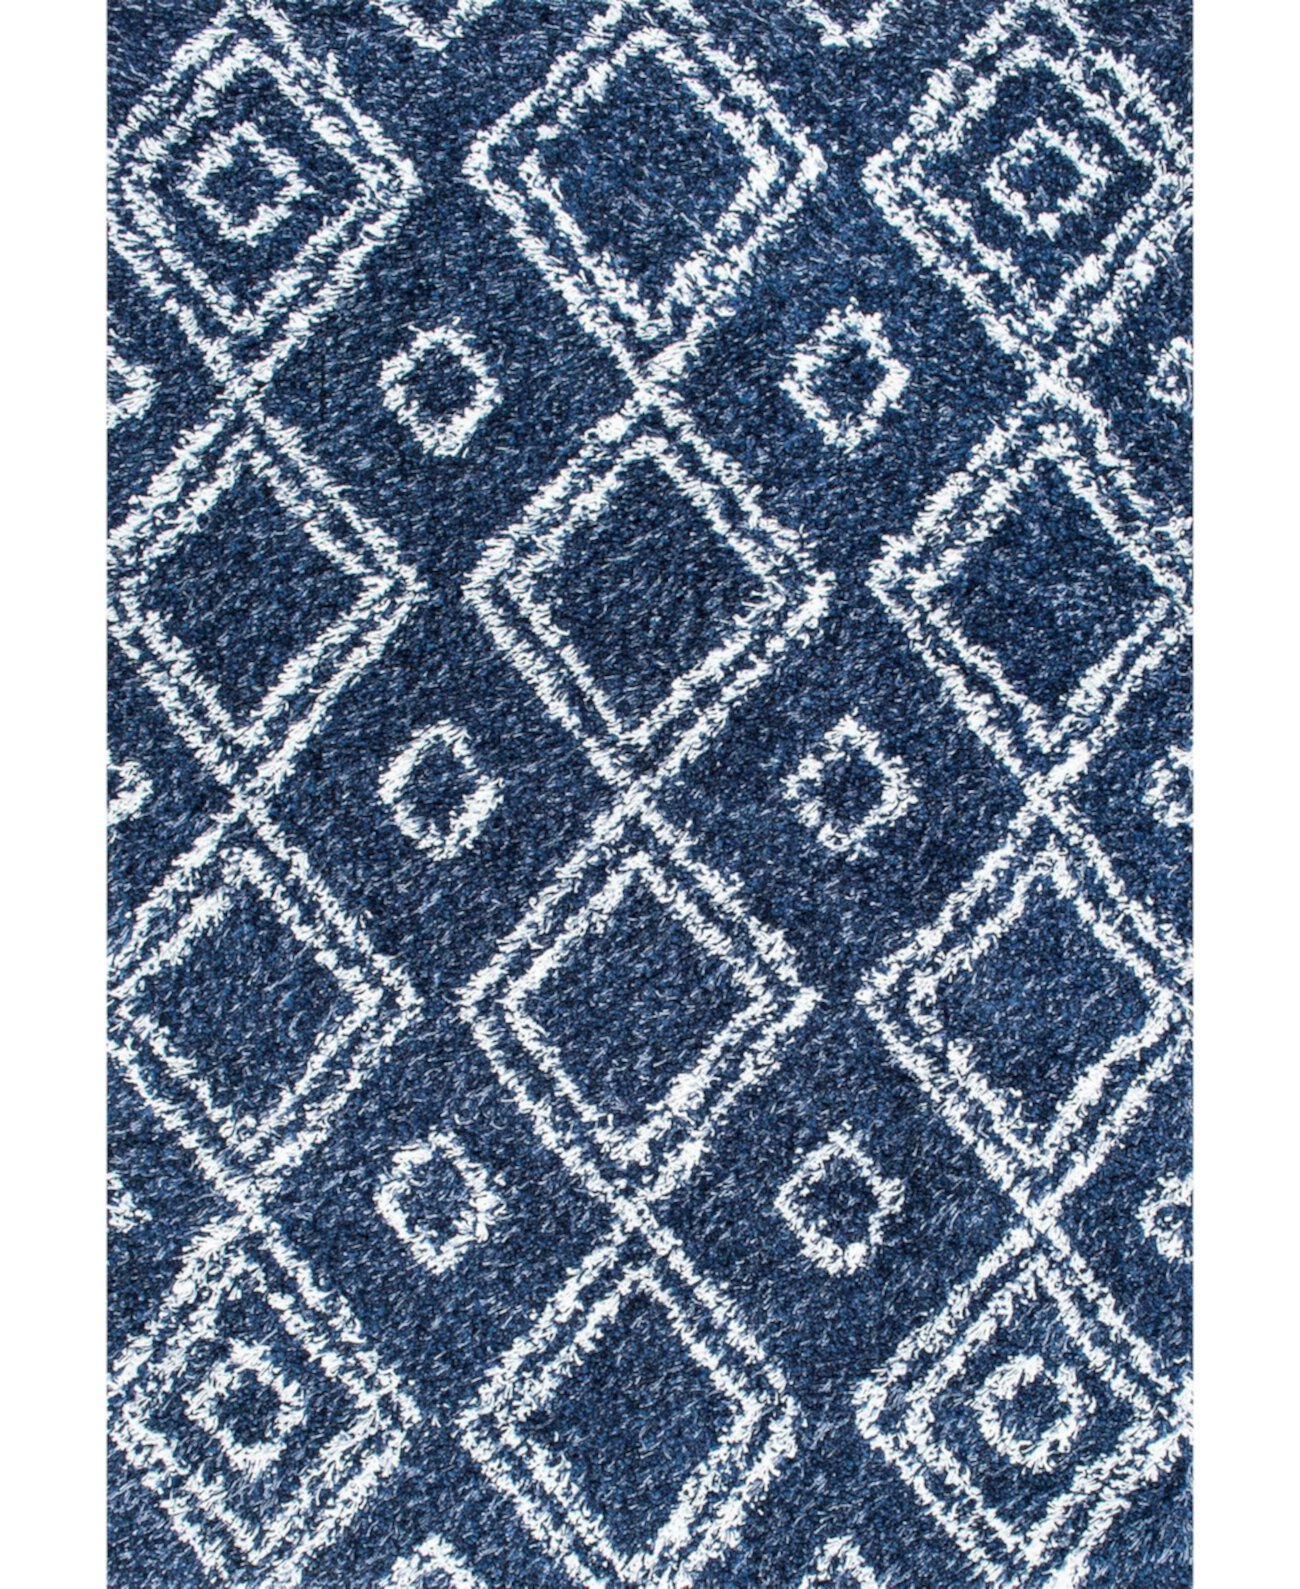 Iola OZSG18C Синий коврик размером 4 x 6 футов NuLOOM